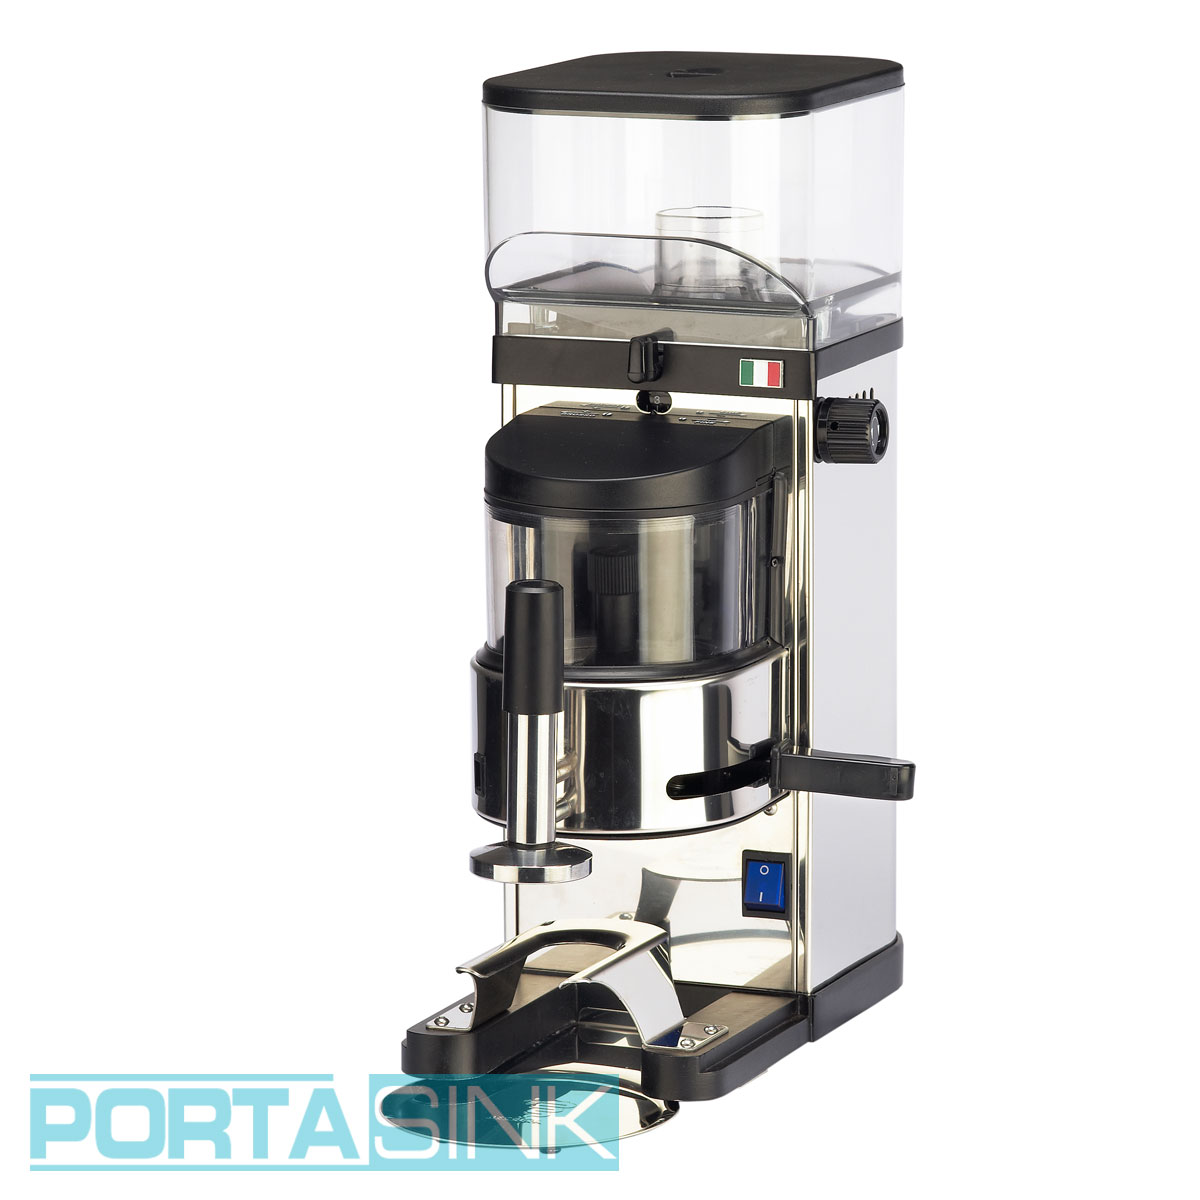 https://www.porta-sink.com/wp-content/uploads/2018/12/porta-sink-espresso-grinder-automatic-00.jpg